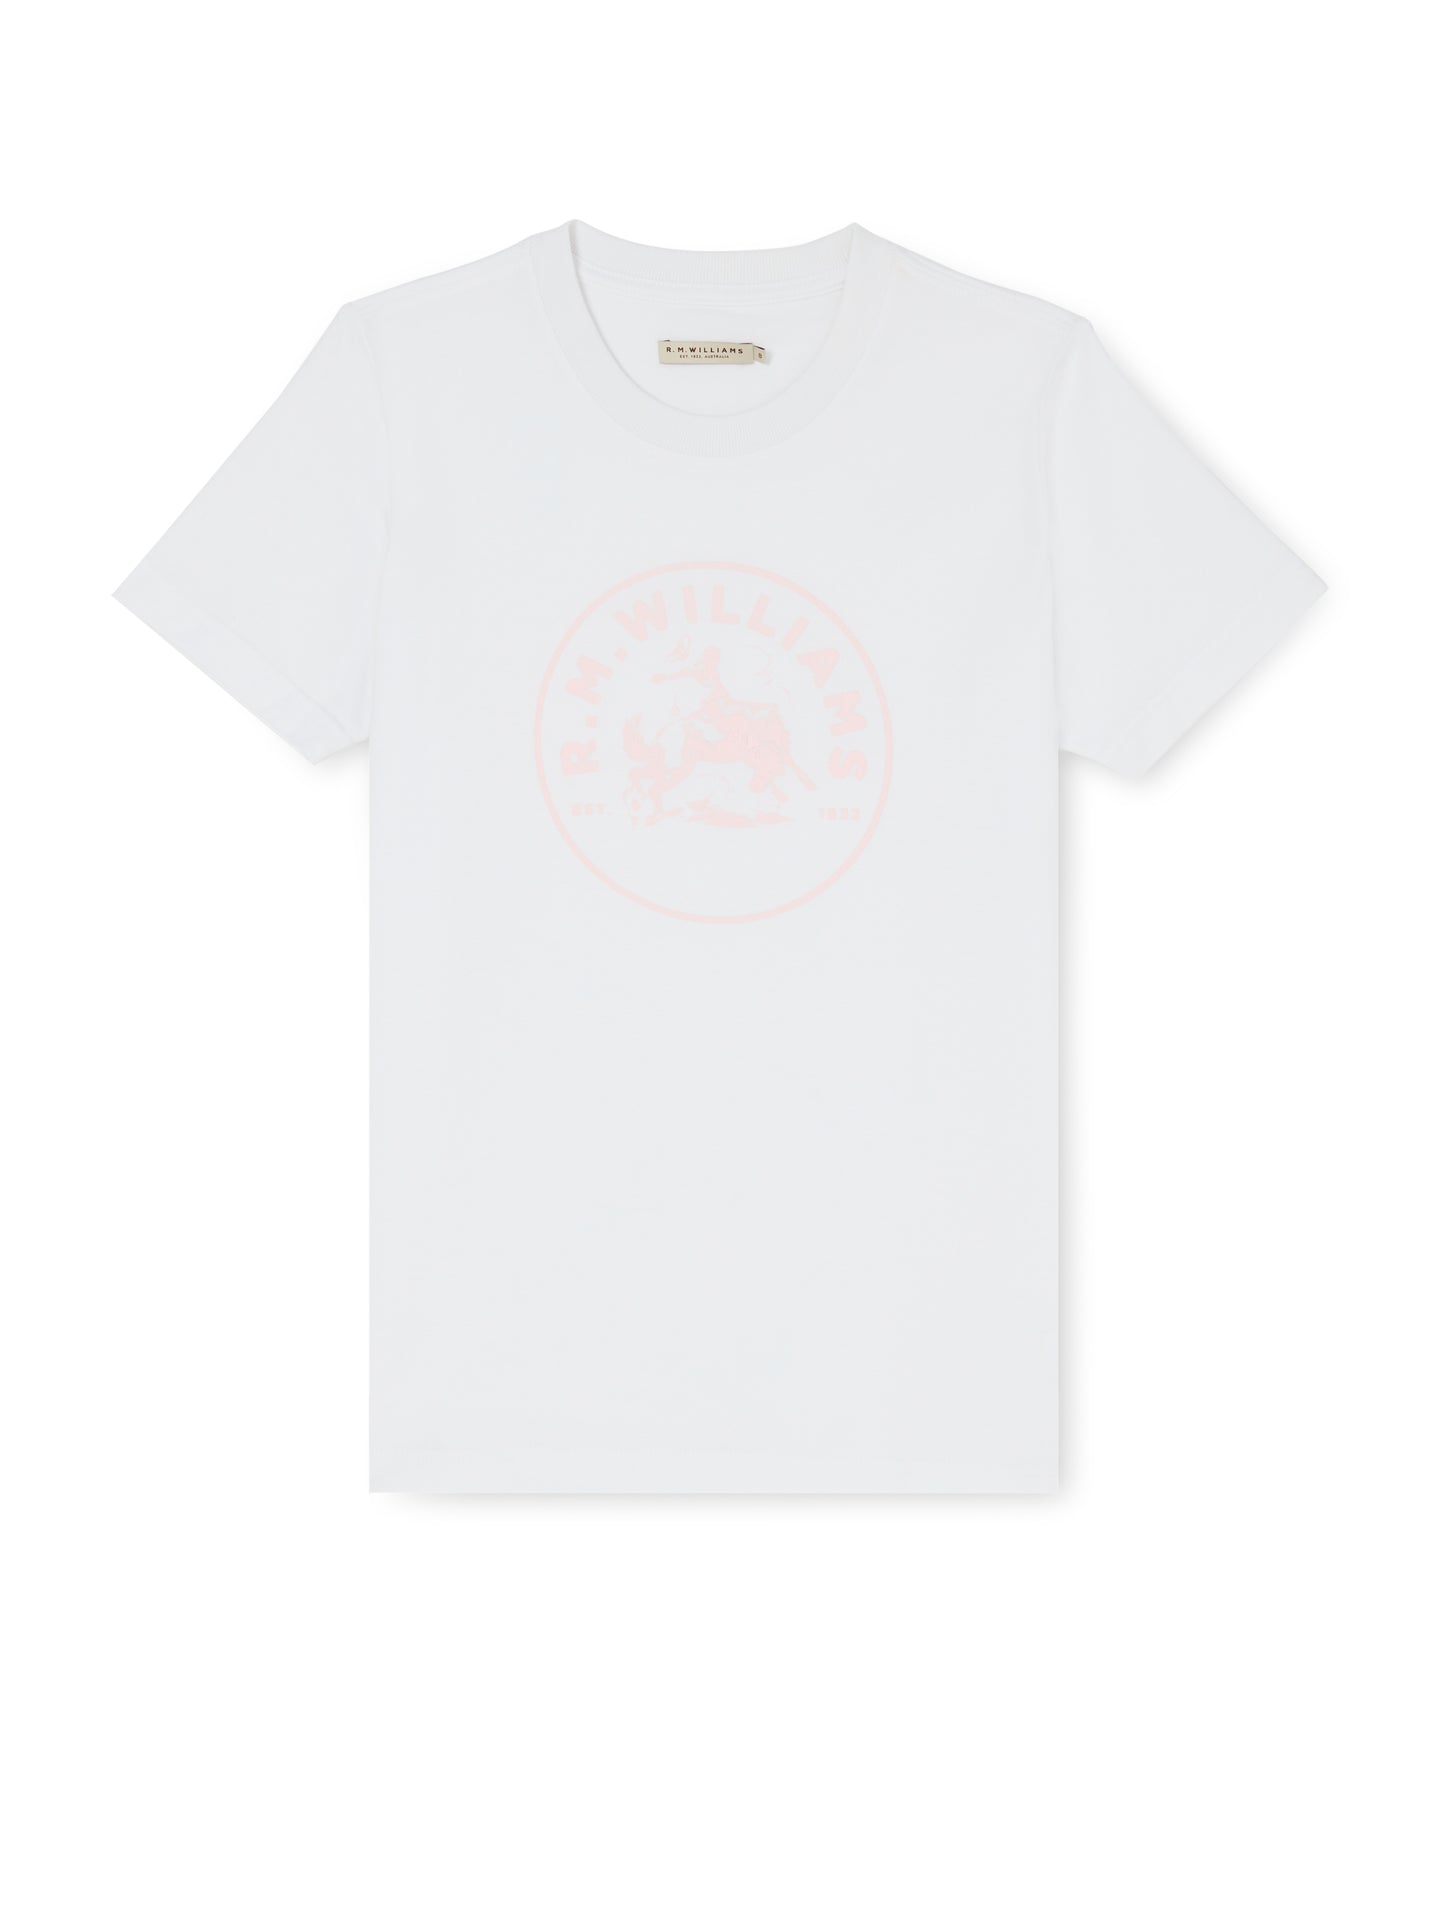 Tarcoola T-Shirt White